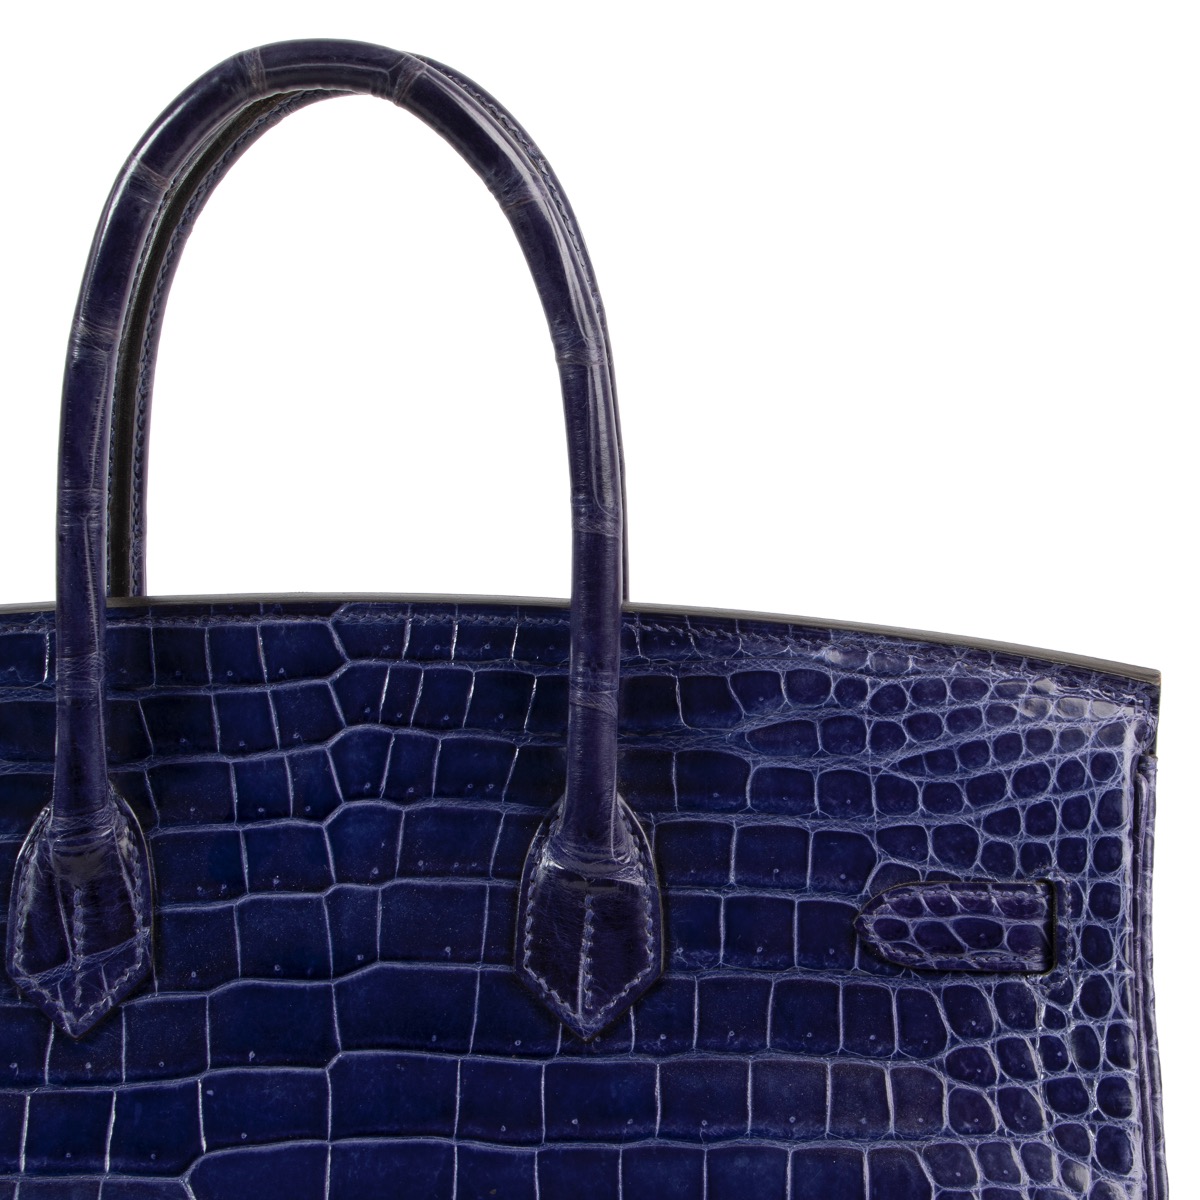 An Hermes 35cm Blue Abysse Crocodile Birkin Bag, 13 x 9.5 x 7.